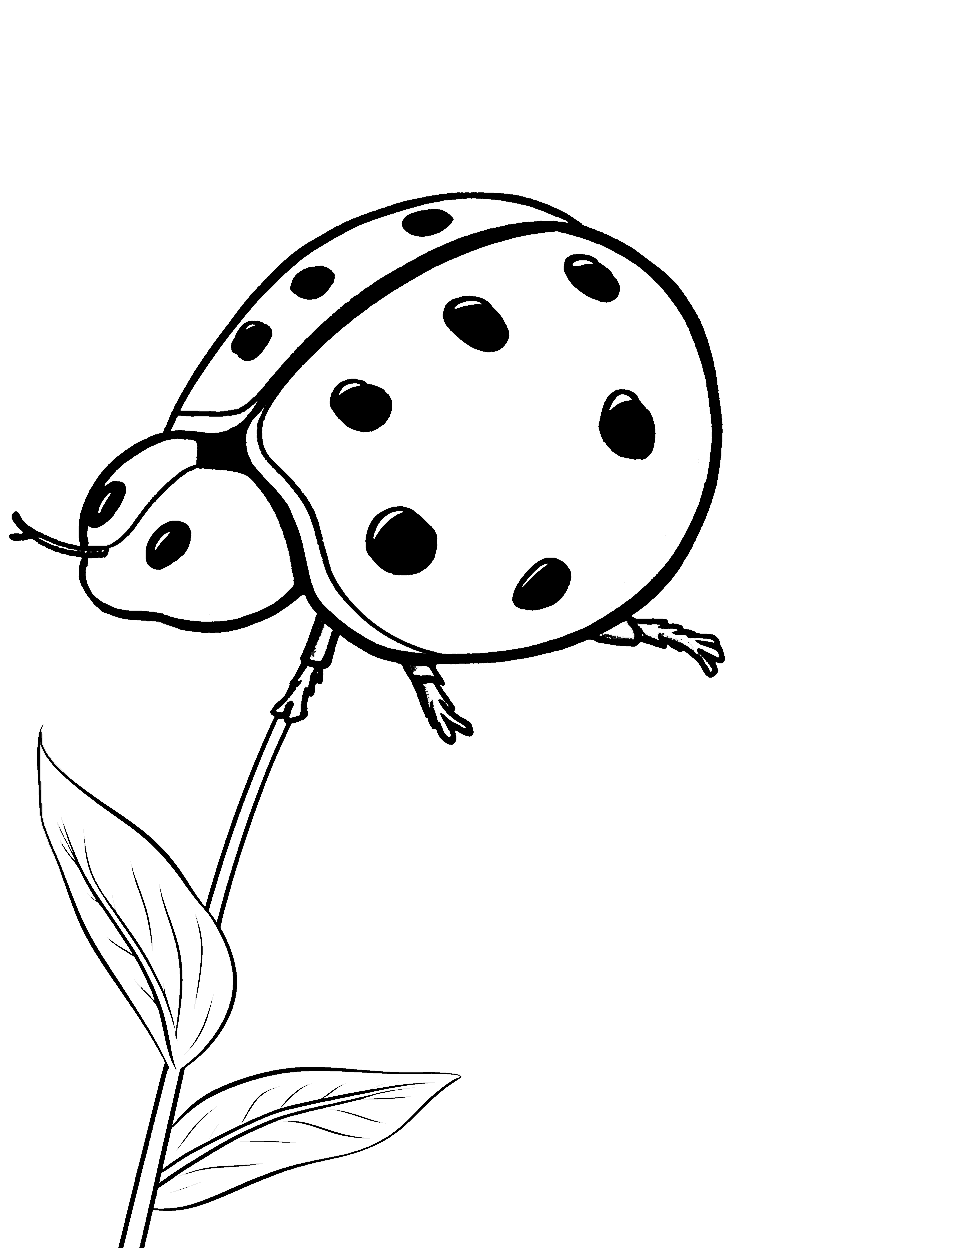 Cute Ladybug Coloring Page - An adorable ladybug dragging a small twig.